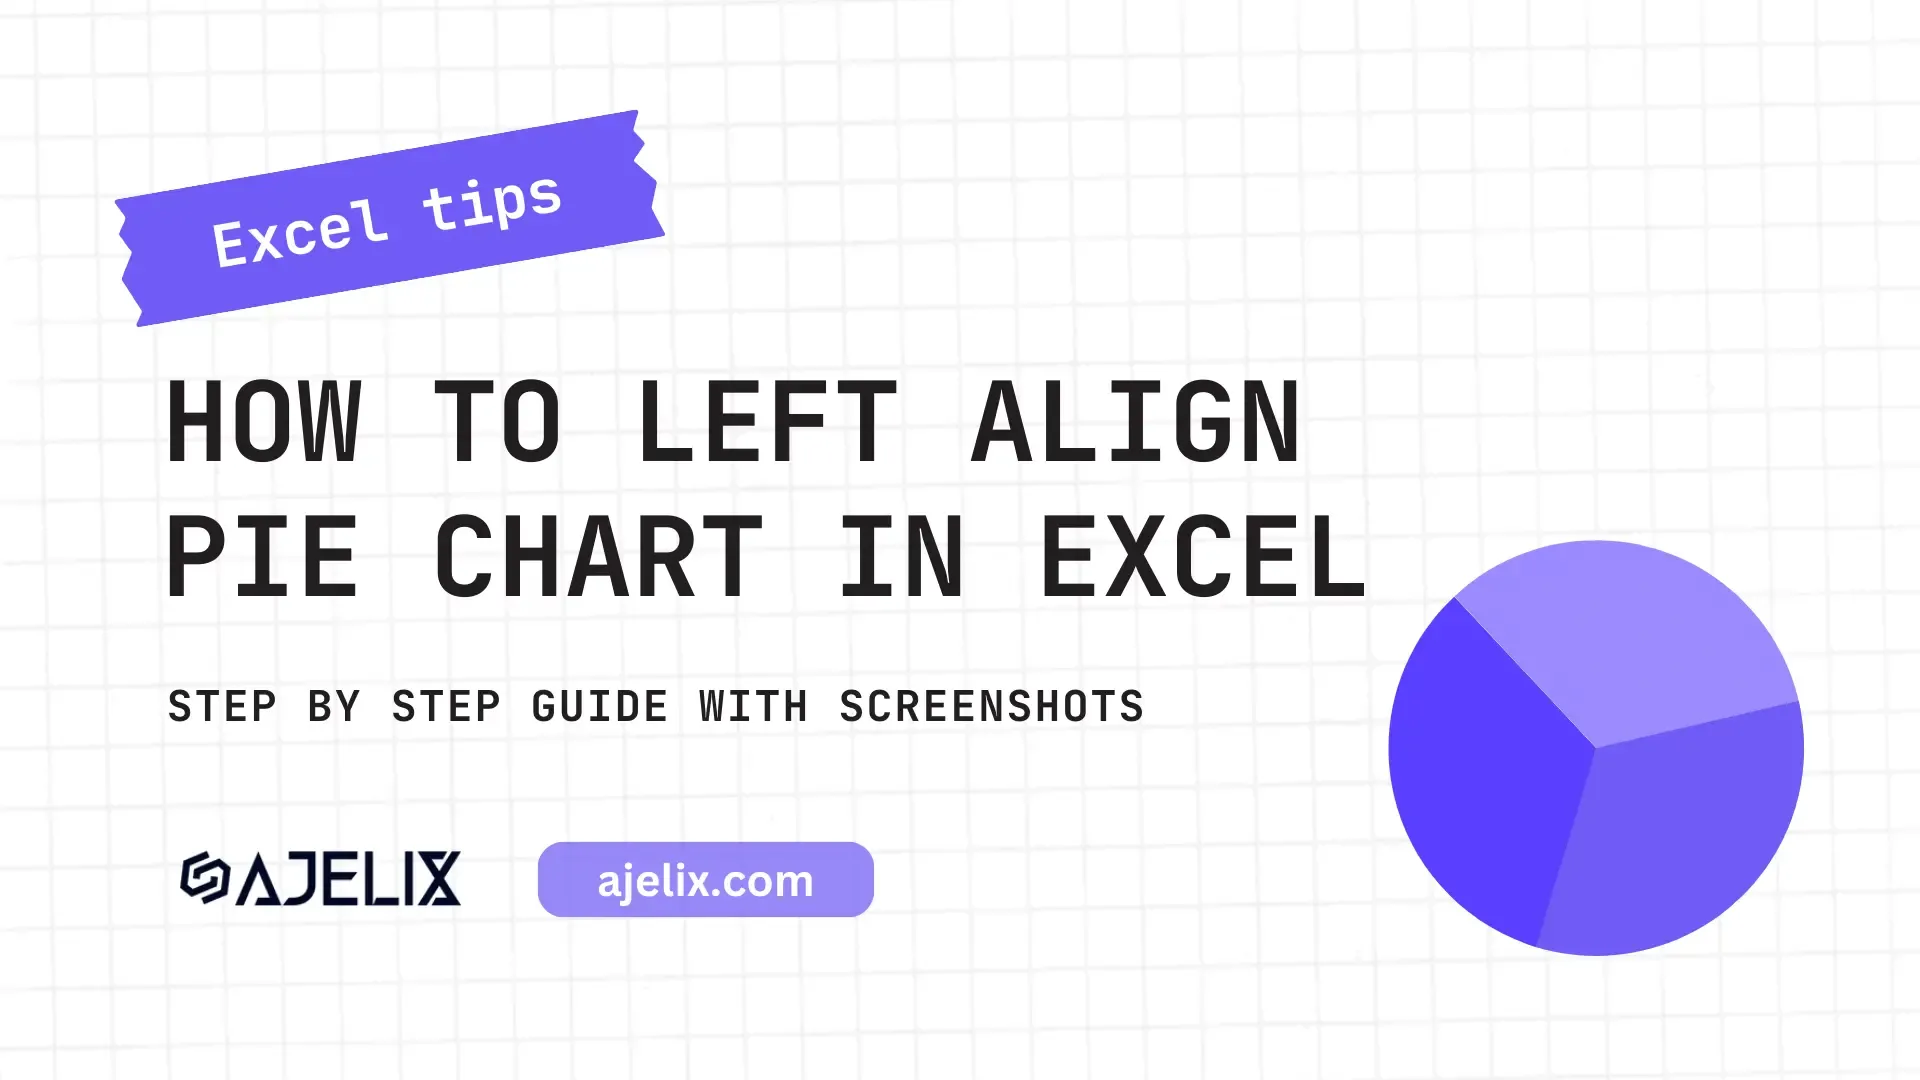 How to left align pie chart in excel